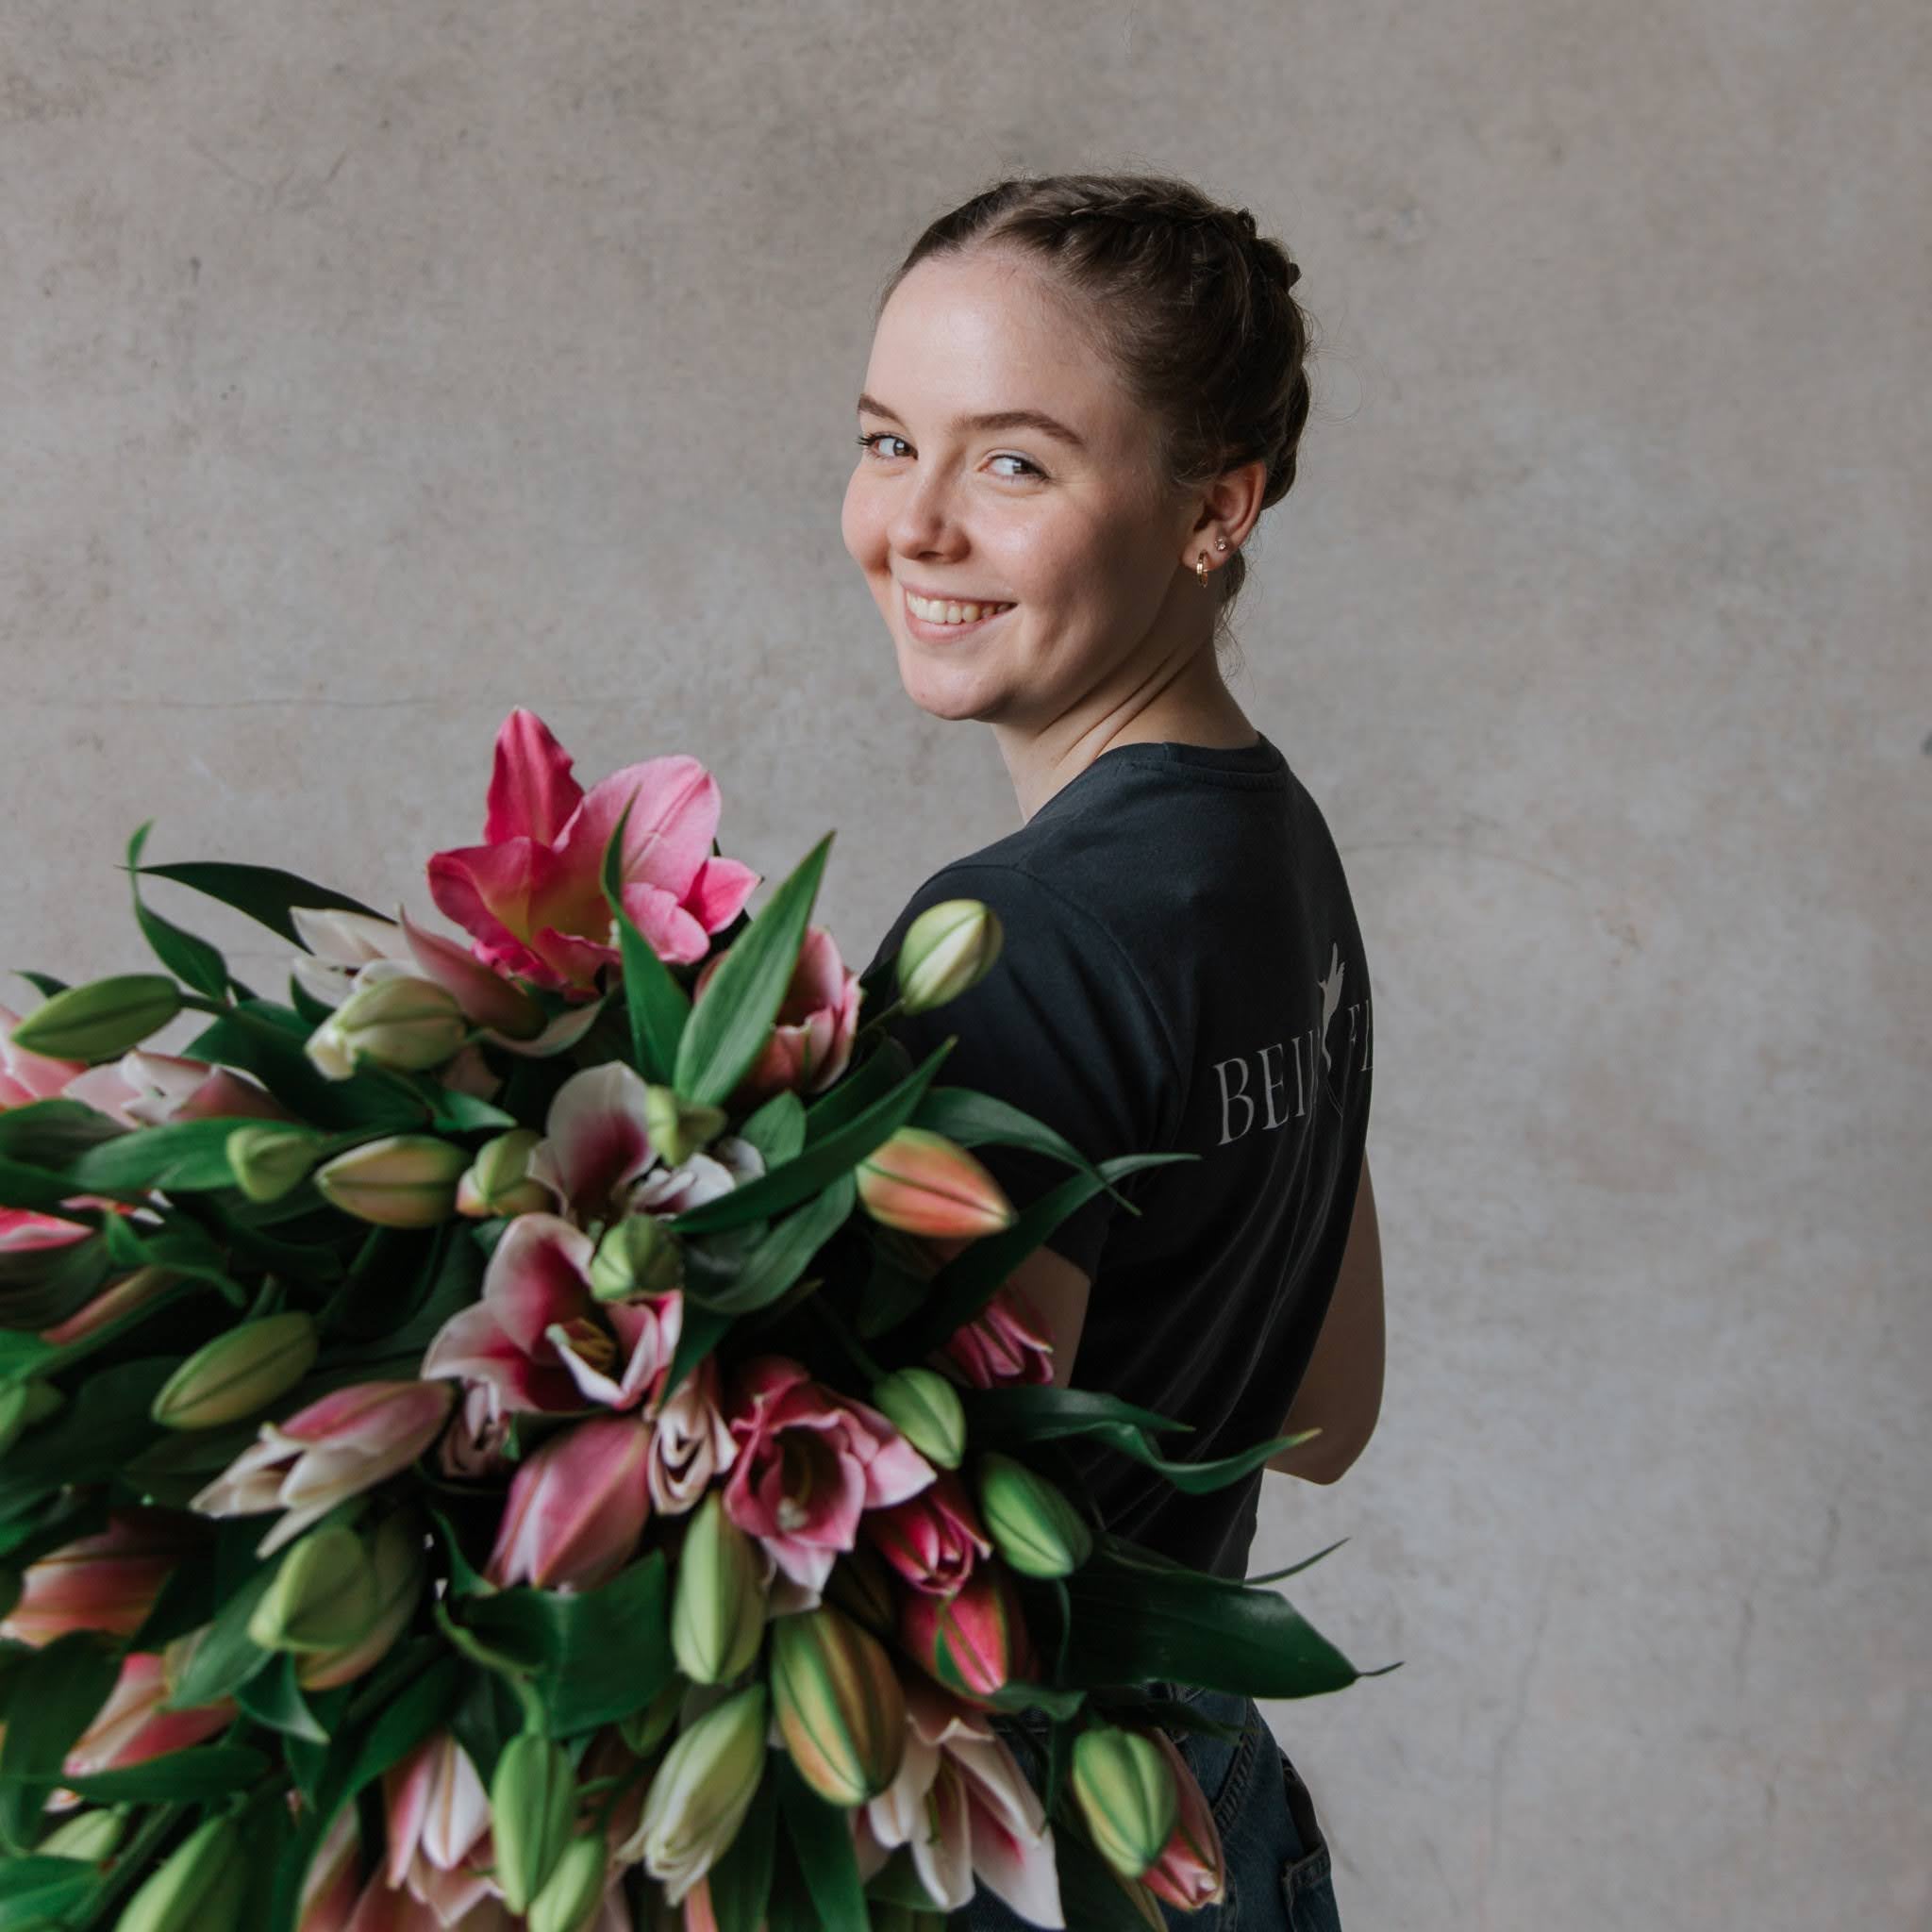 Mary Fryar Beija Flor Florist holding a bunch of florals